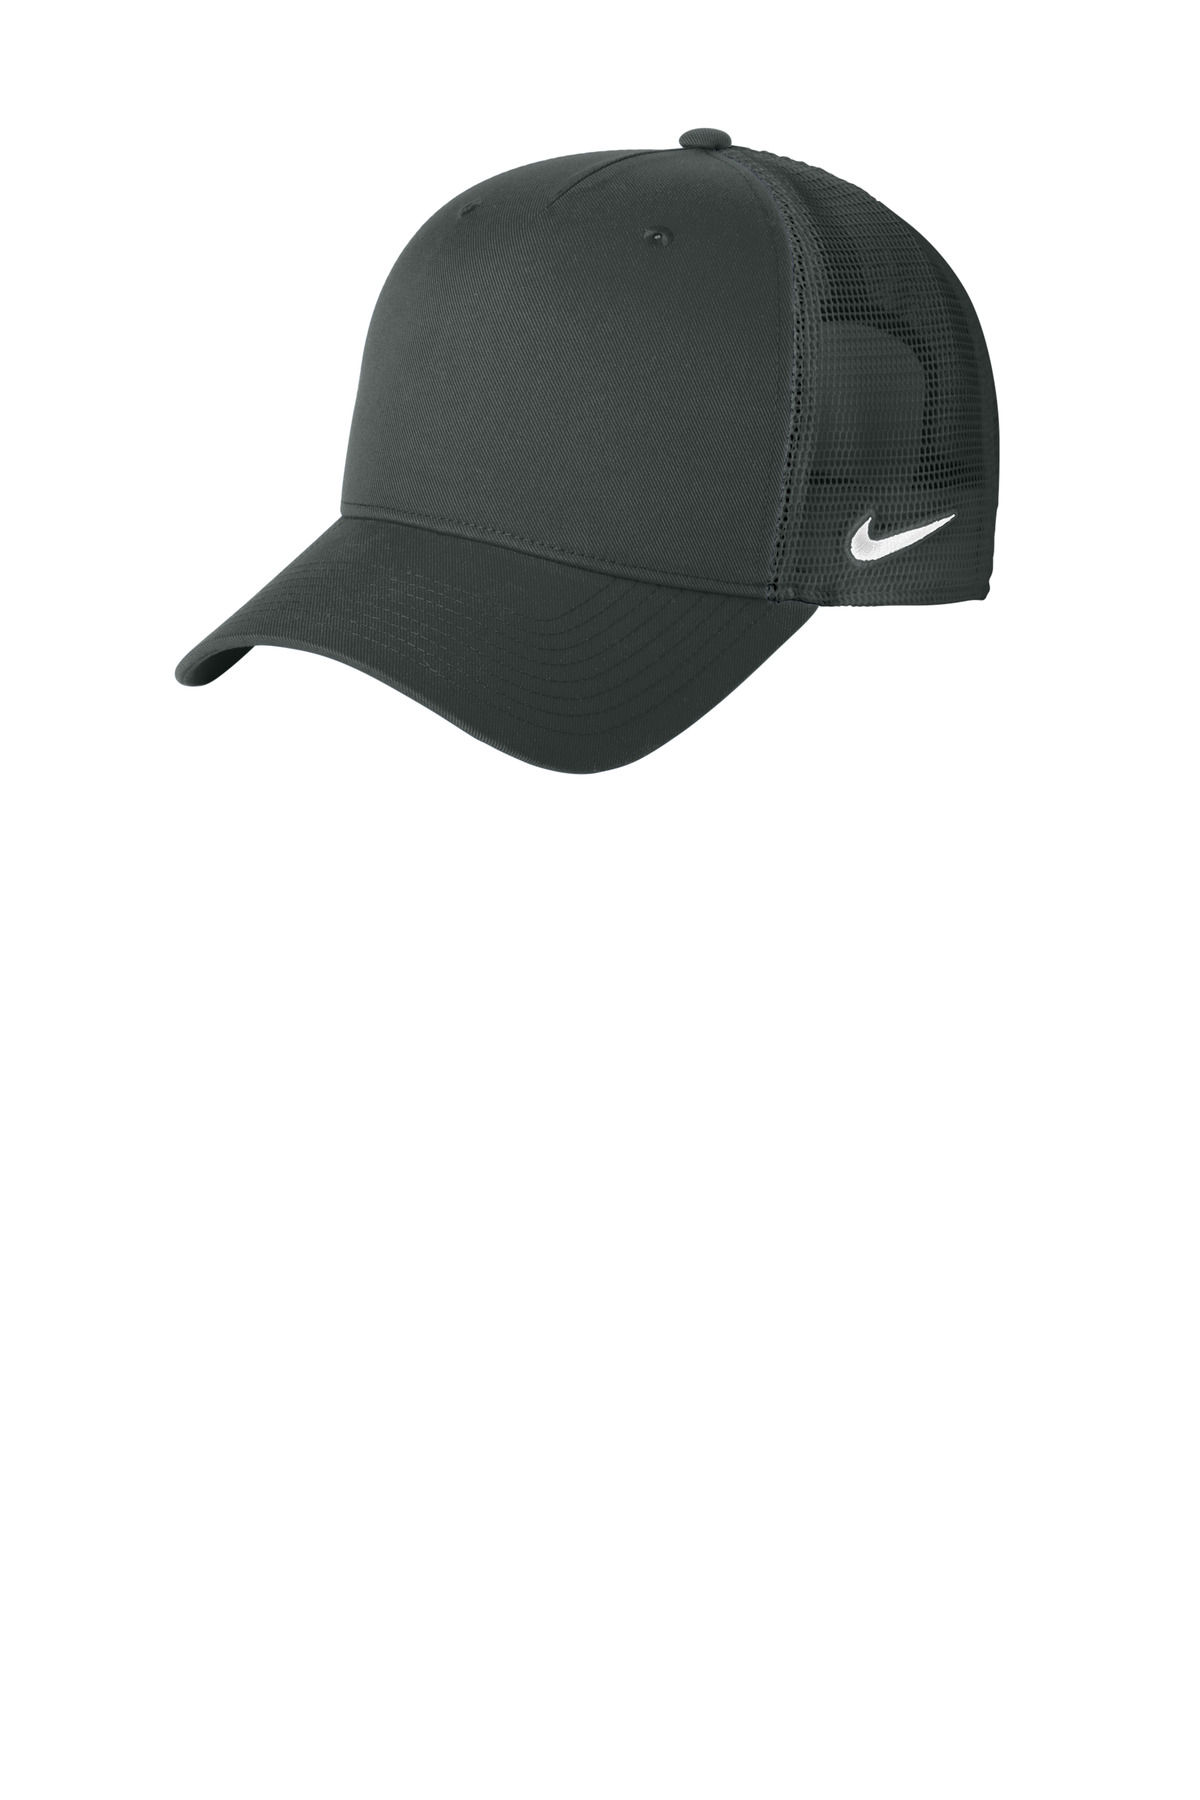 Nike Snapback Mesh Trucker Cap-Nike